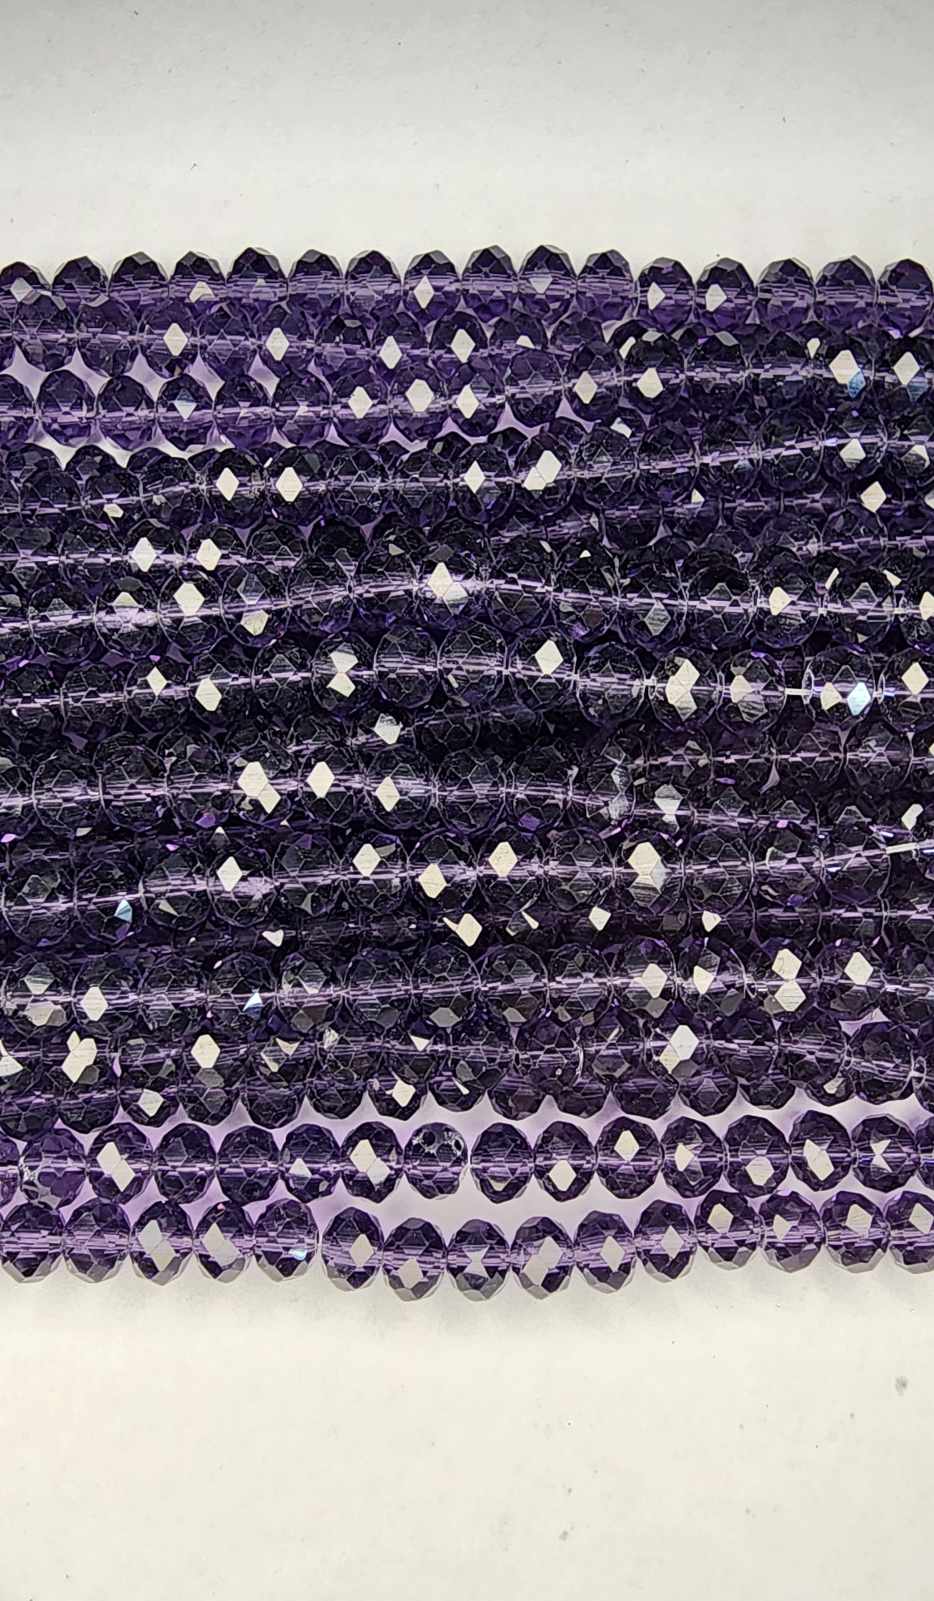 Dark purple Strand of Glass beads